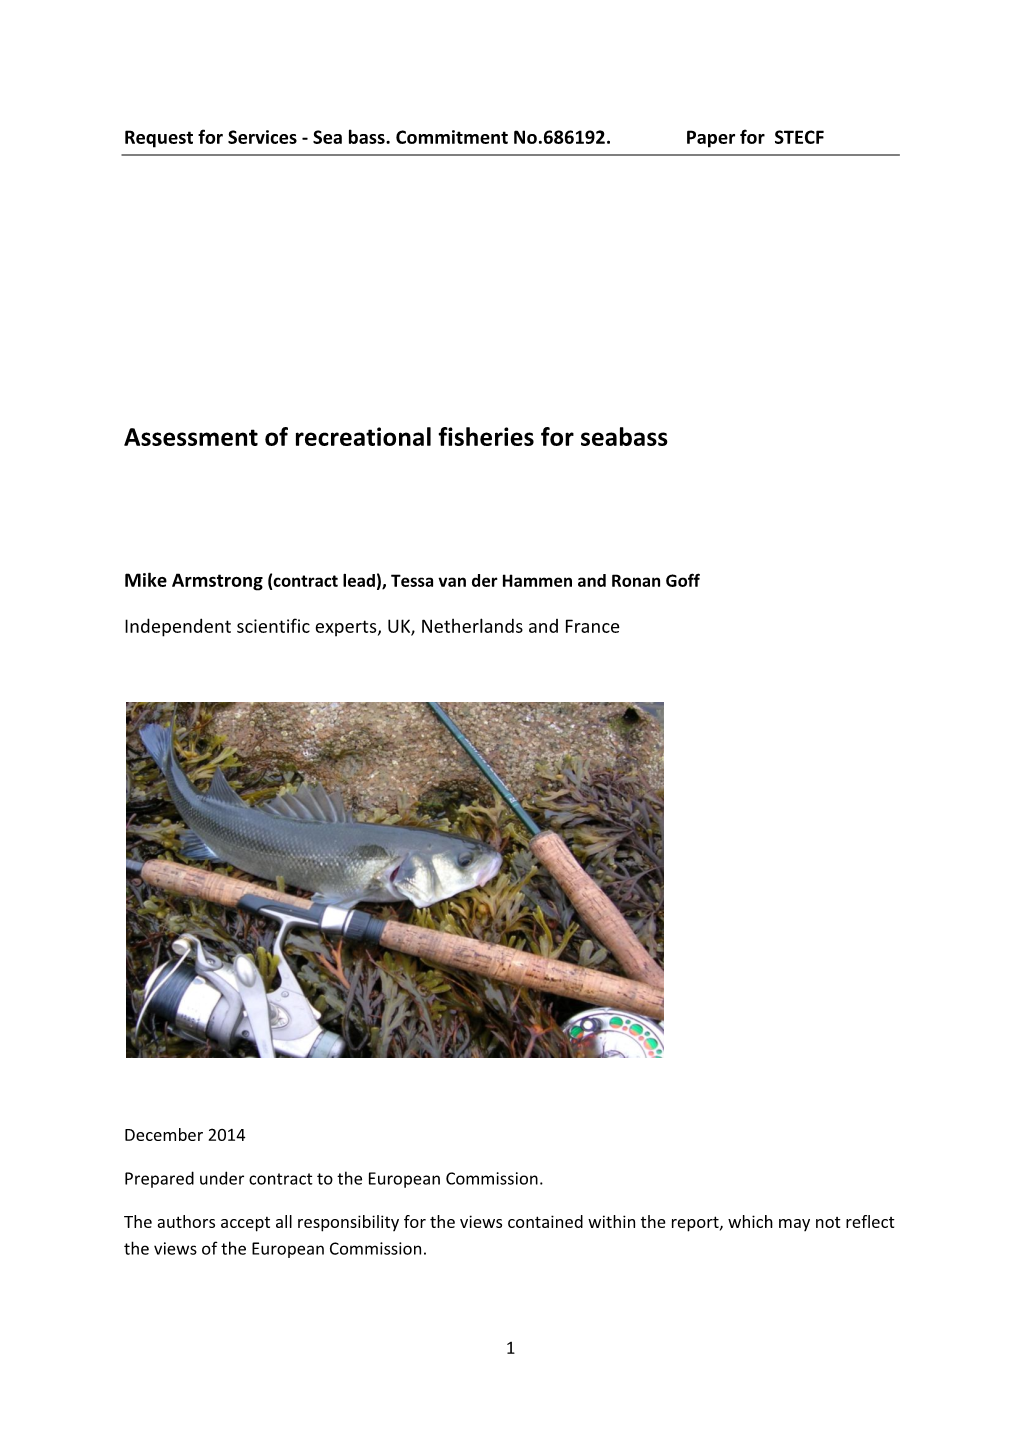 Assessment of Recreational Fisheries for Seabass